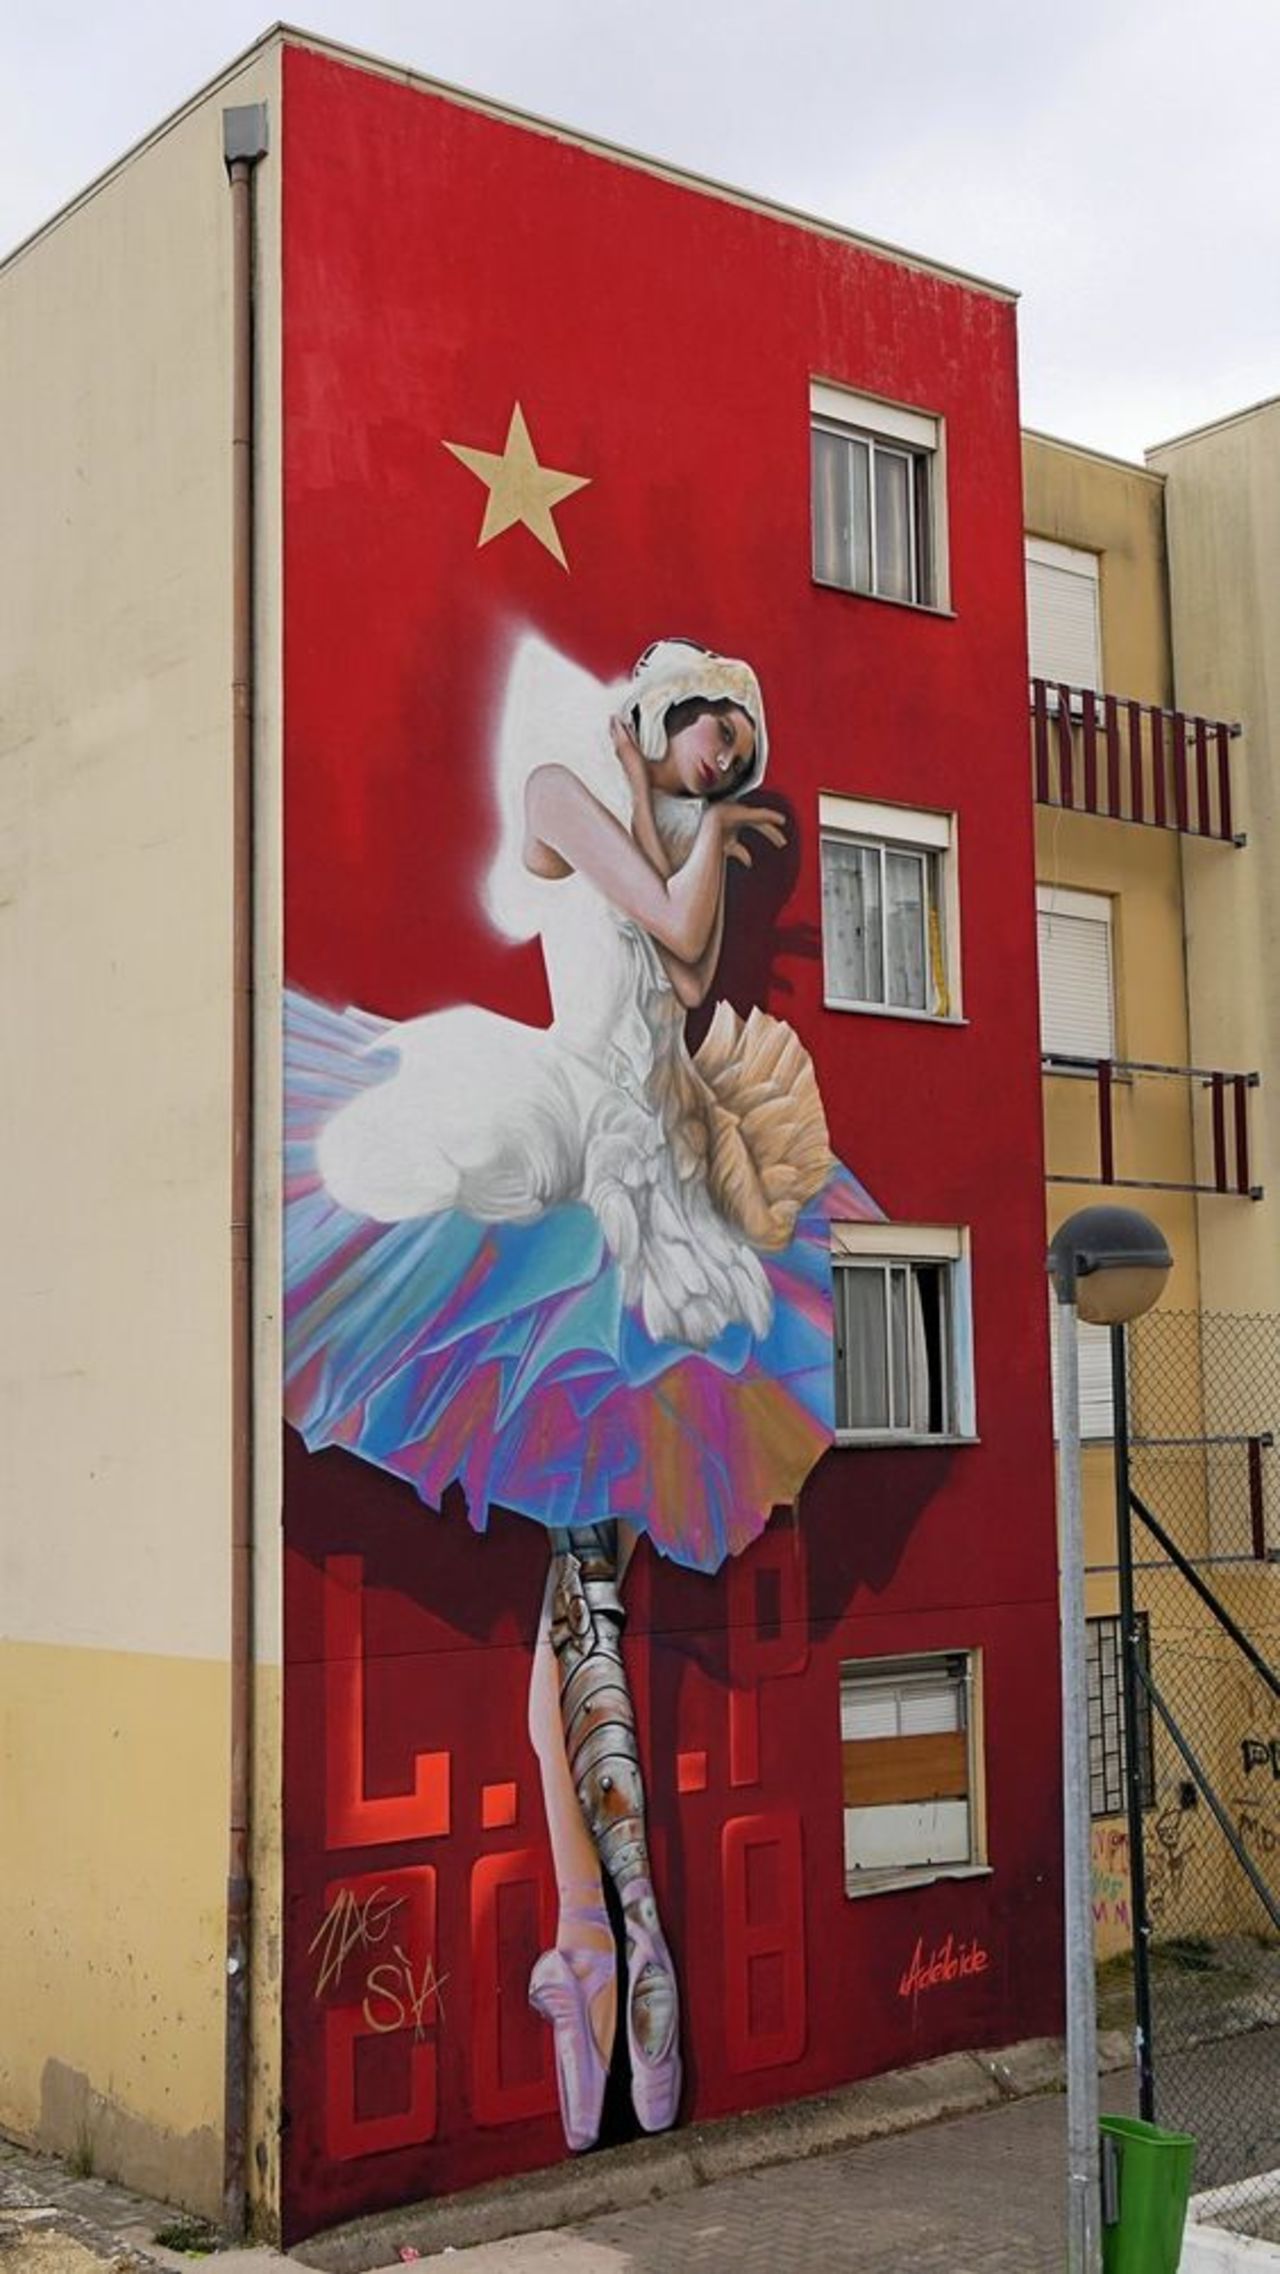 ... soul dancing. Art by Sia & Zag #StreetArt #Art #Soul #Dancing #Poetry #Graffiti #Mural #UrbanArt https://t.co/FmWpFpobcn